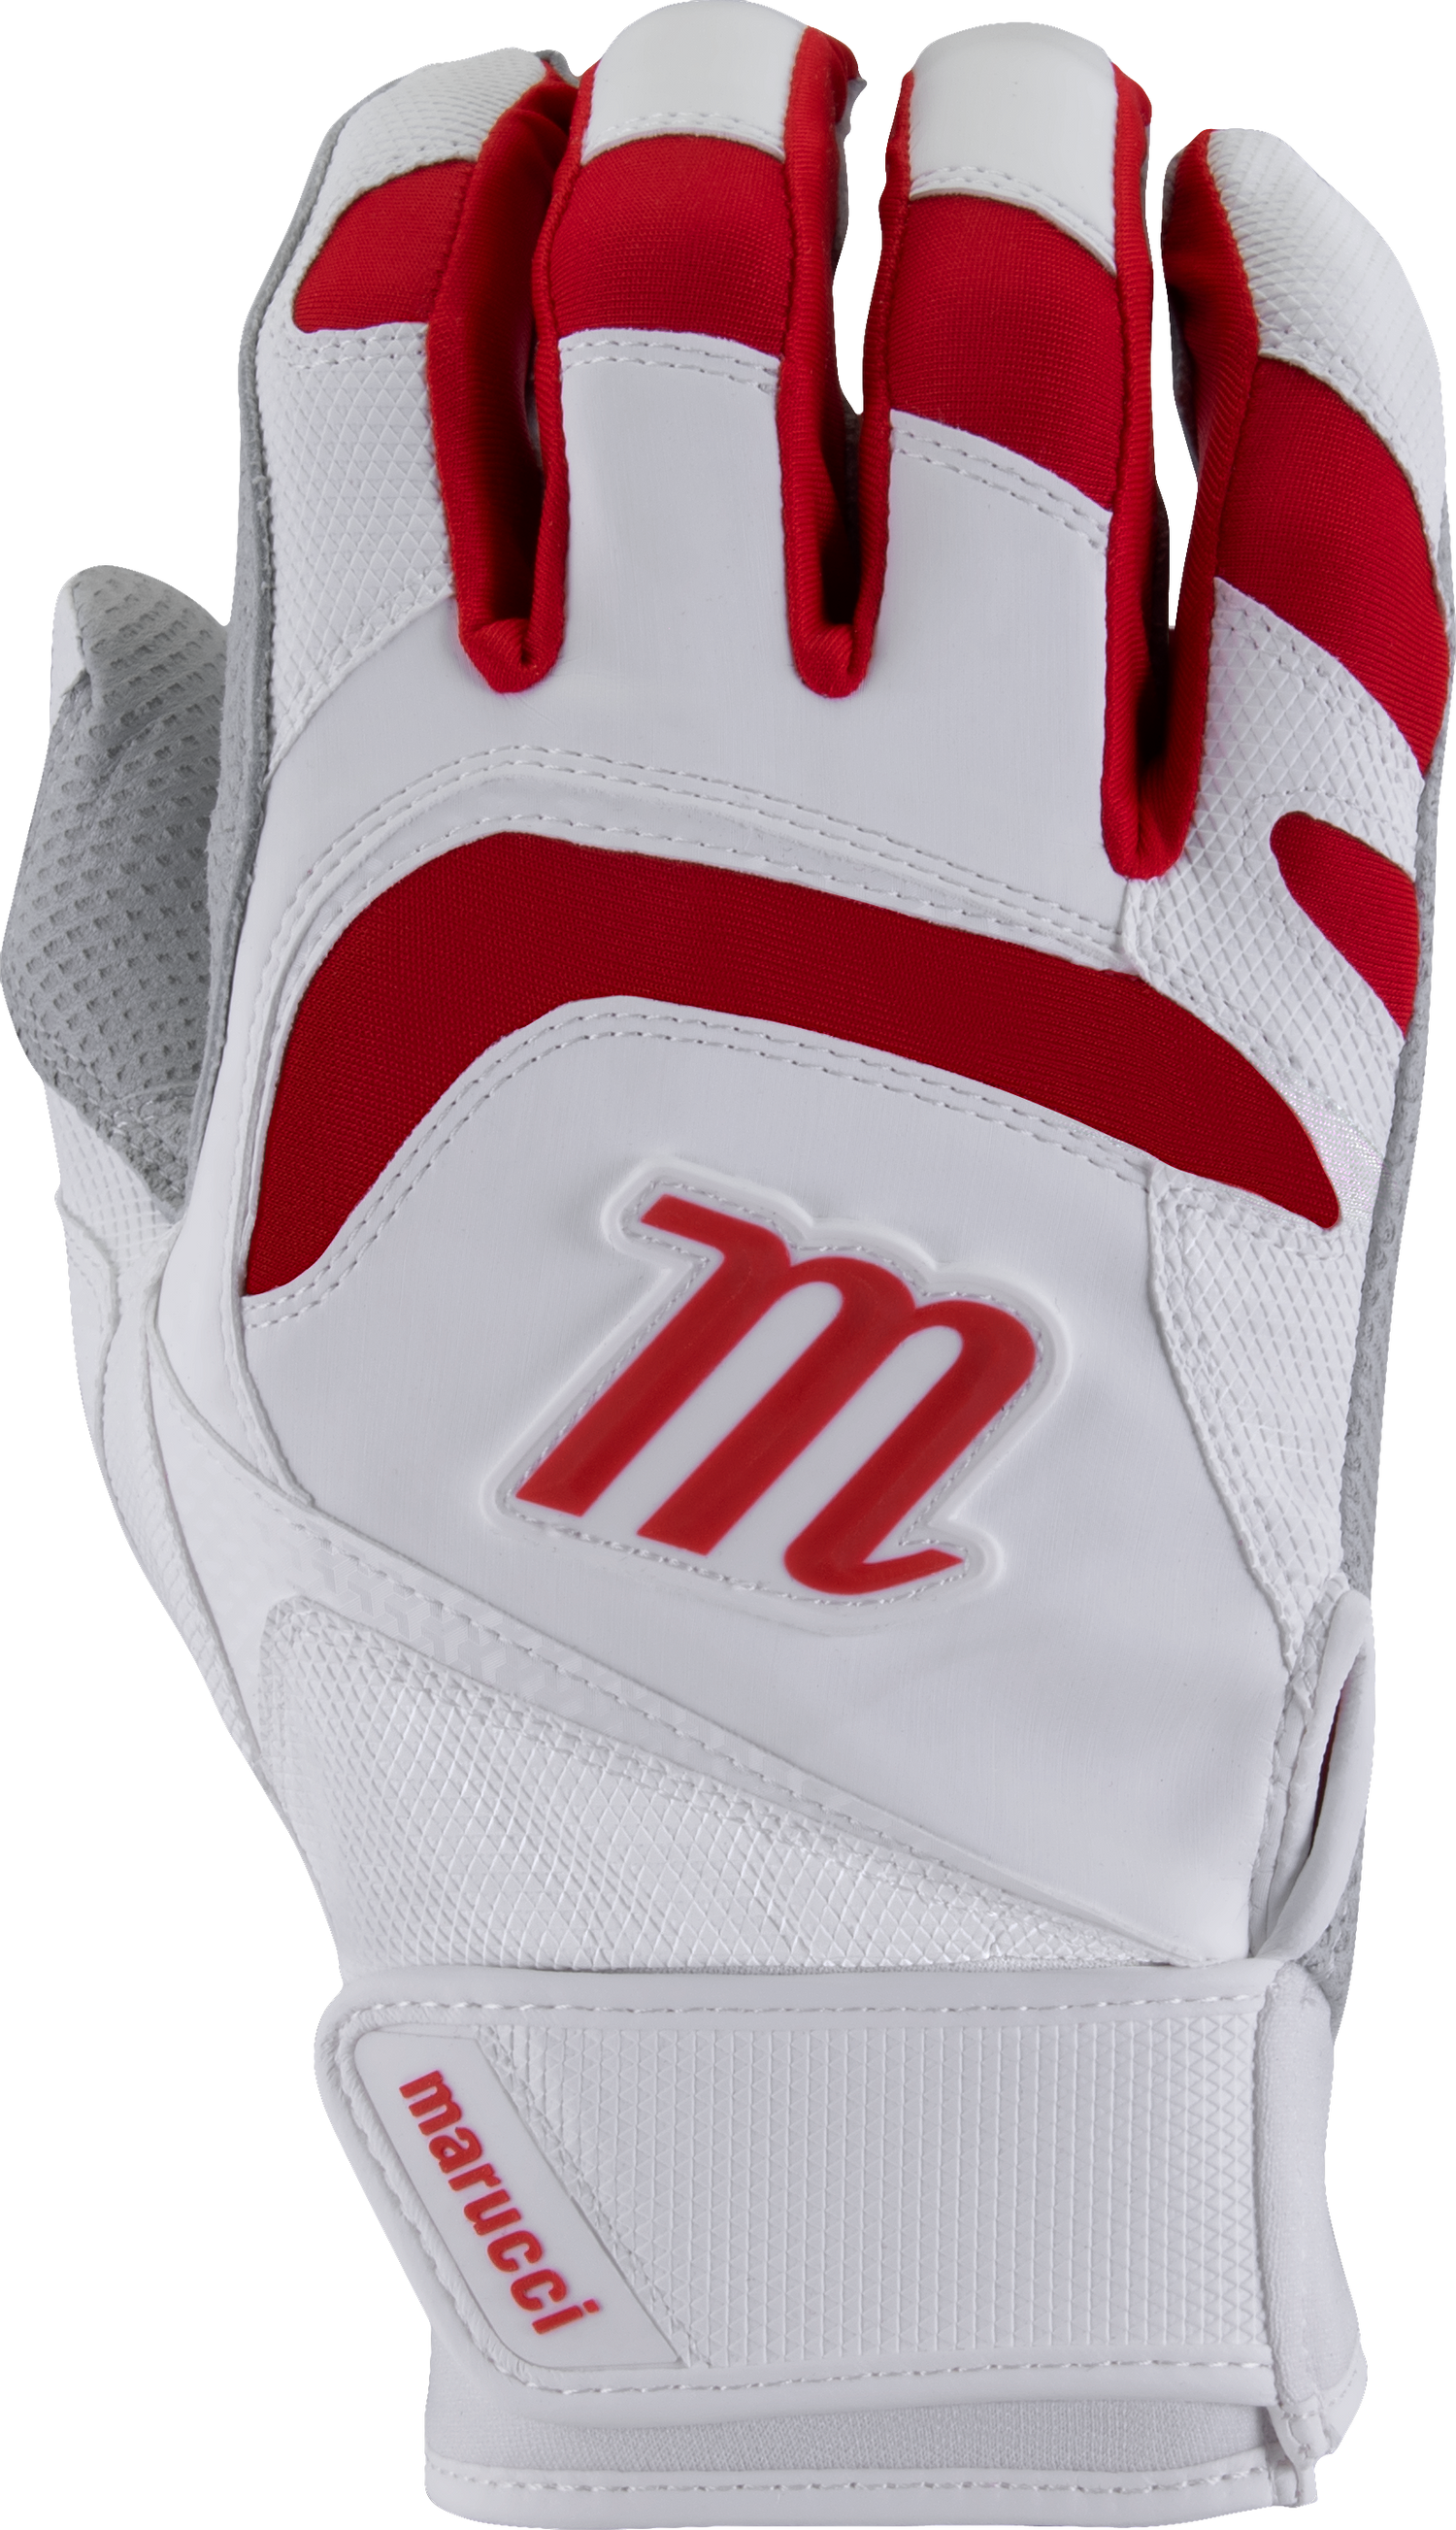 Signature Batting Gloves V4 - Red